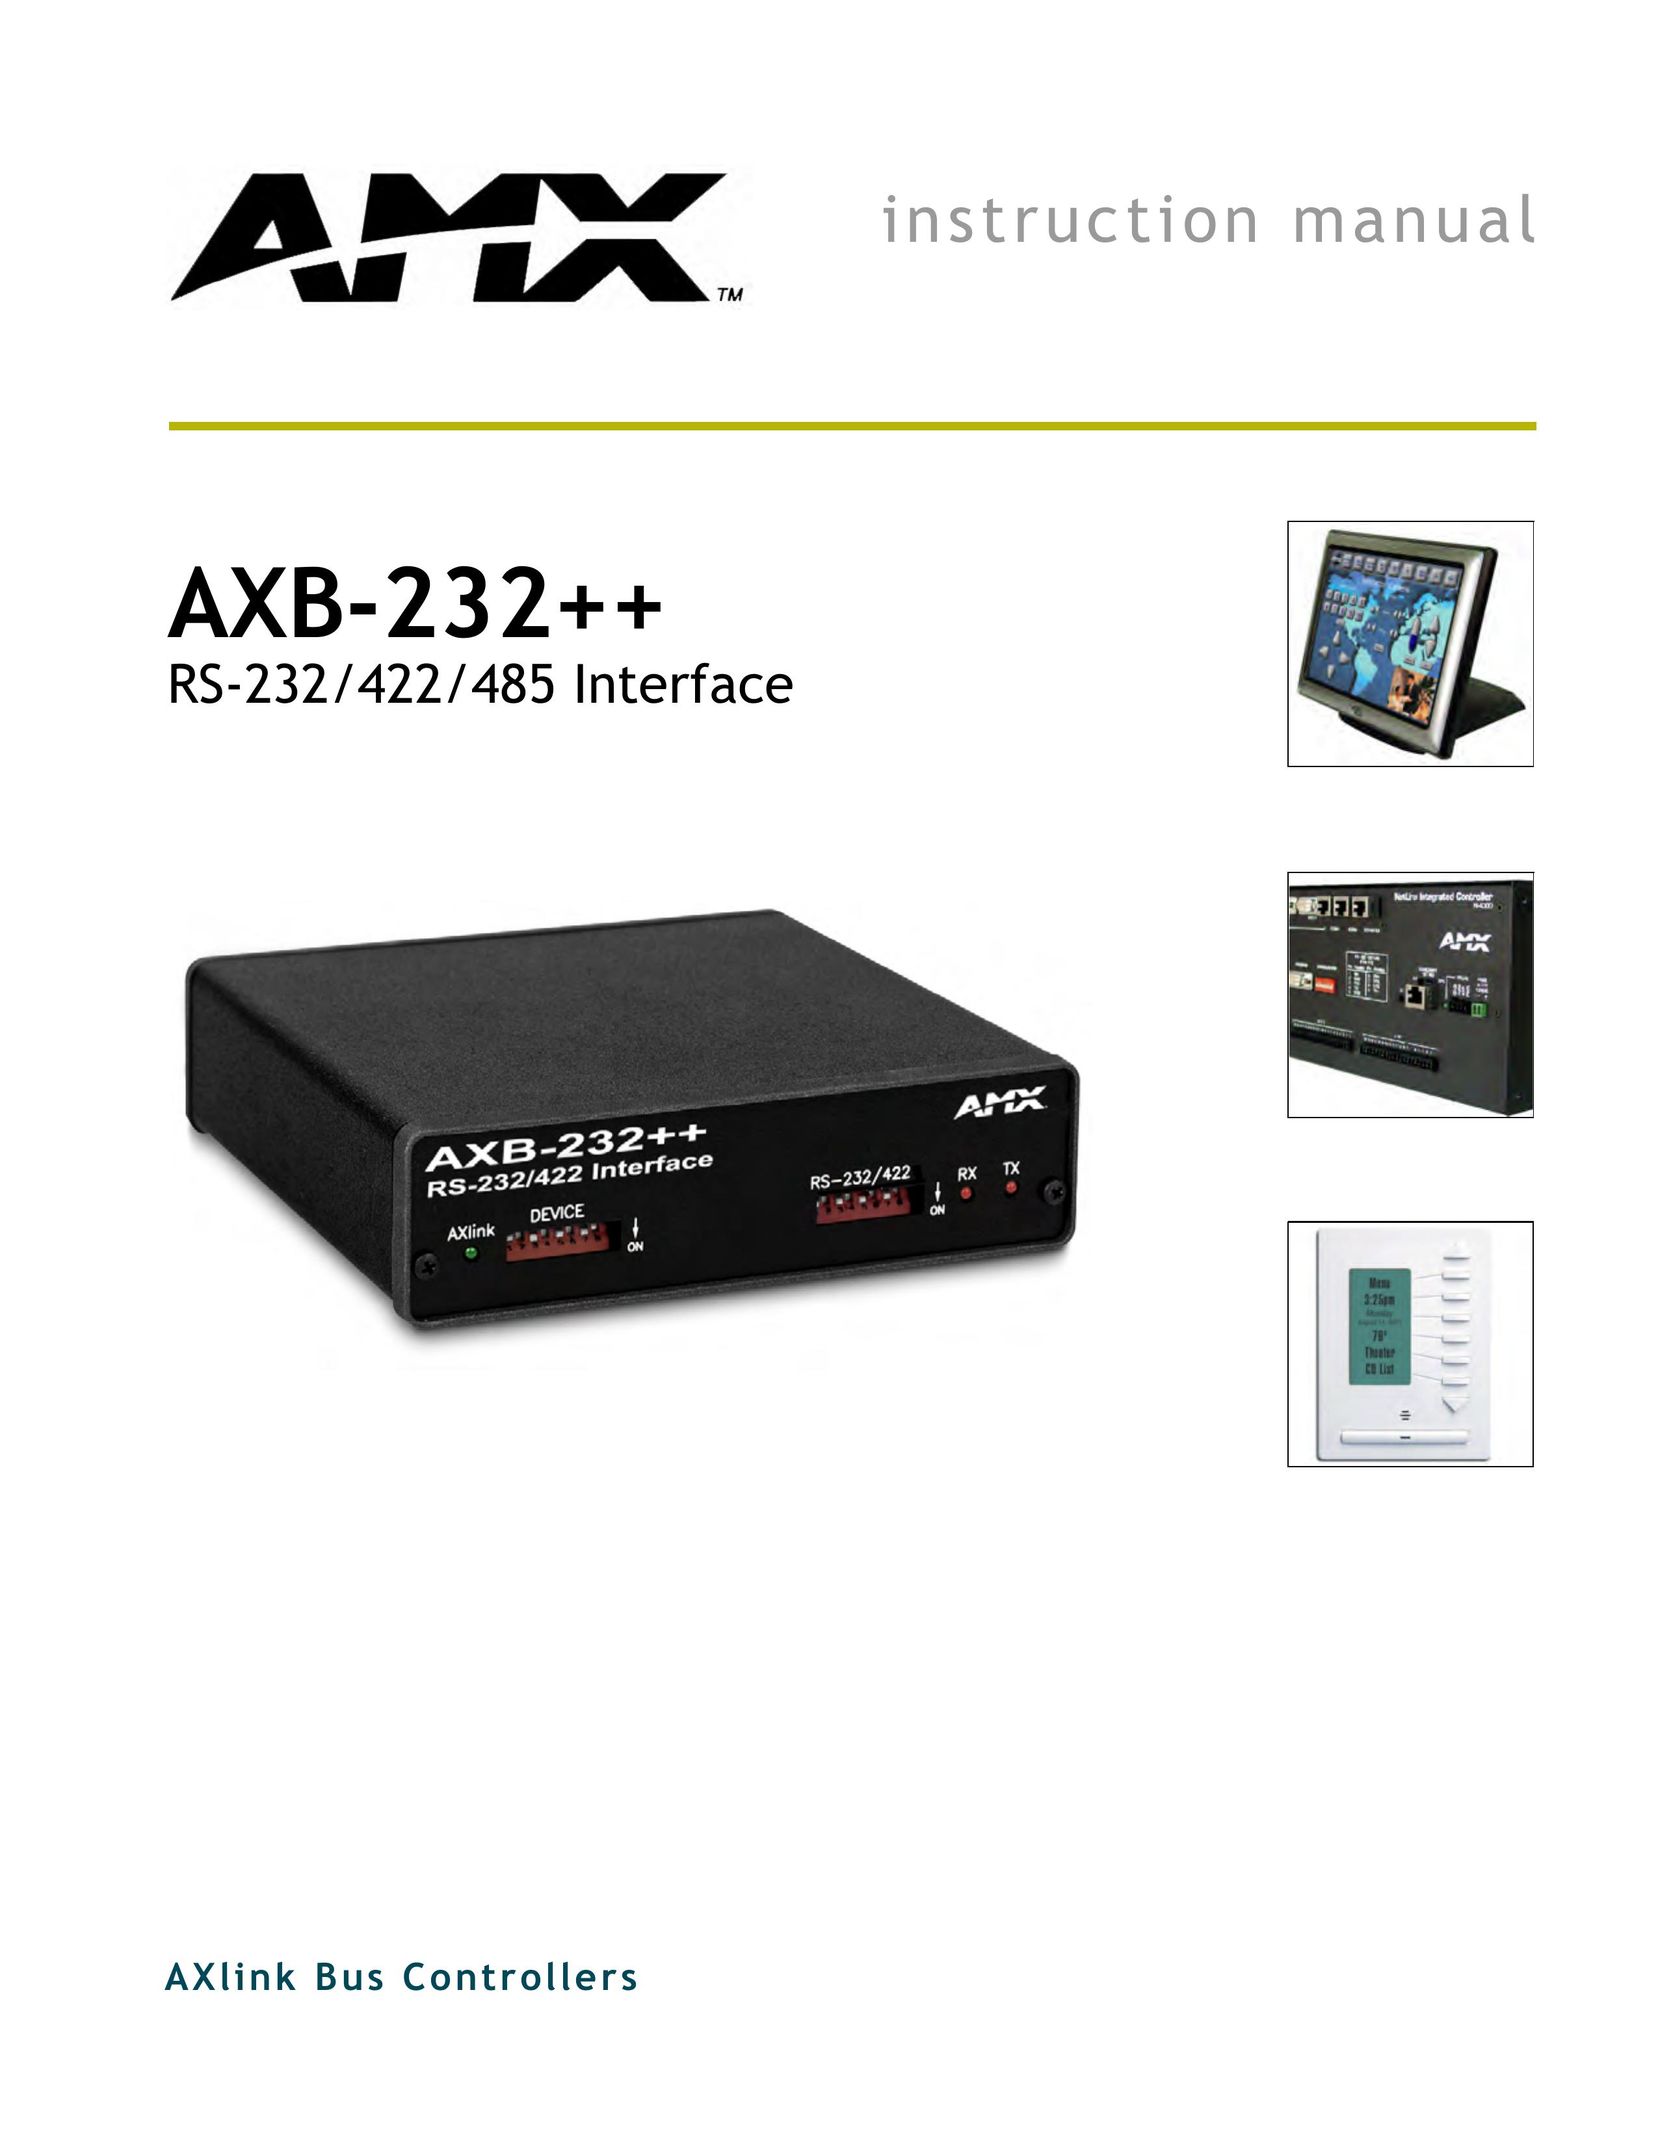 AMX AXB-232++ Network Card User Manual